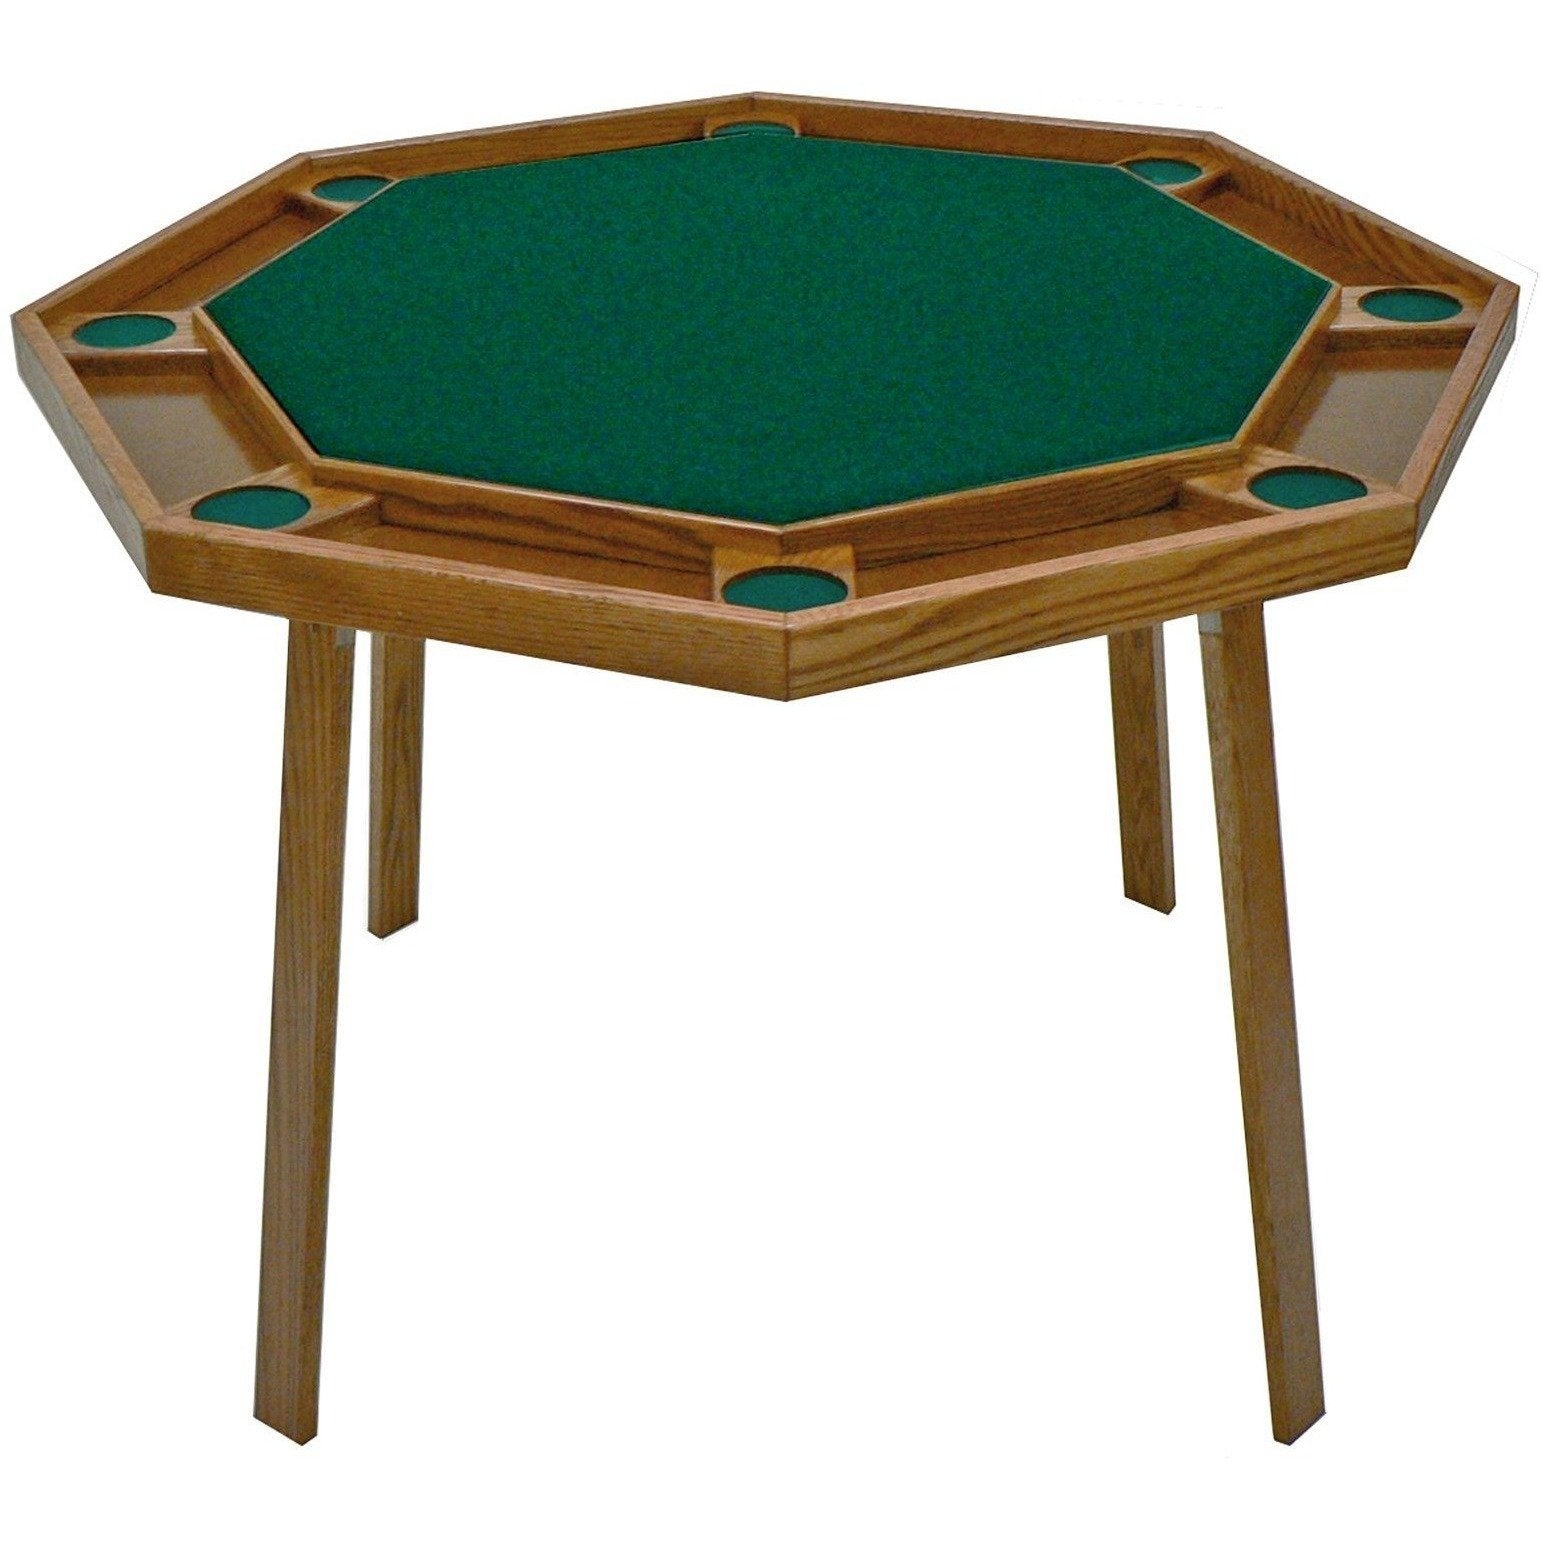 8 seat poker table folding legs octagon